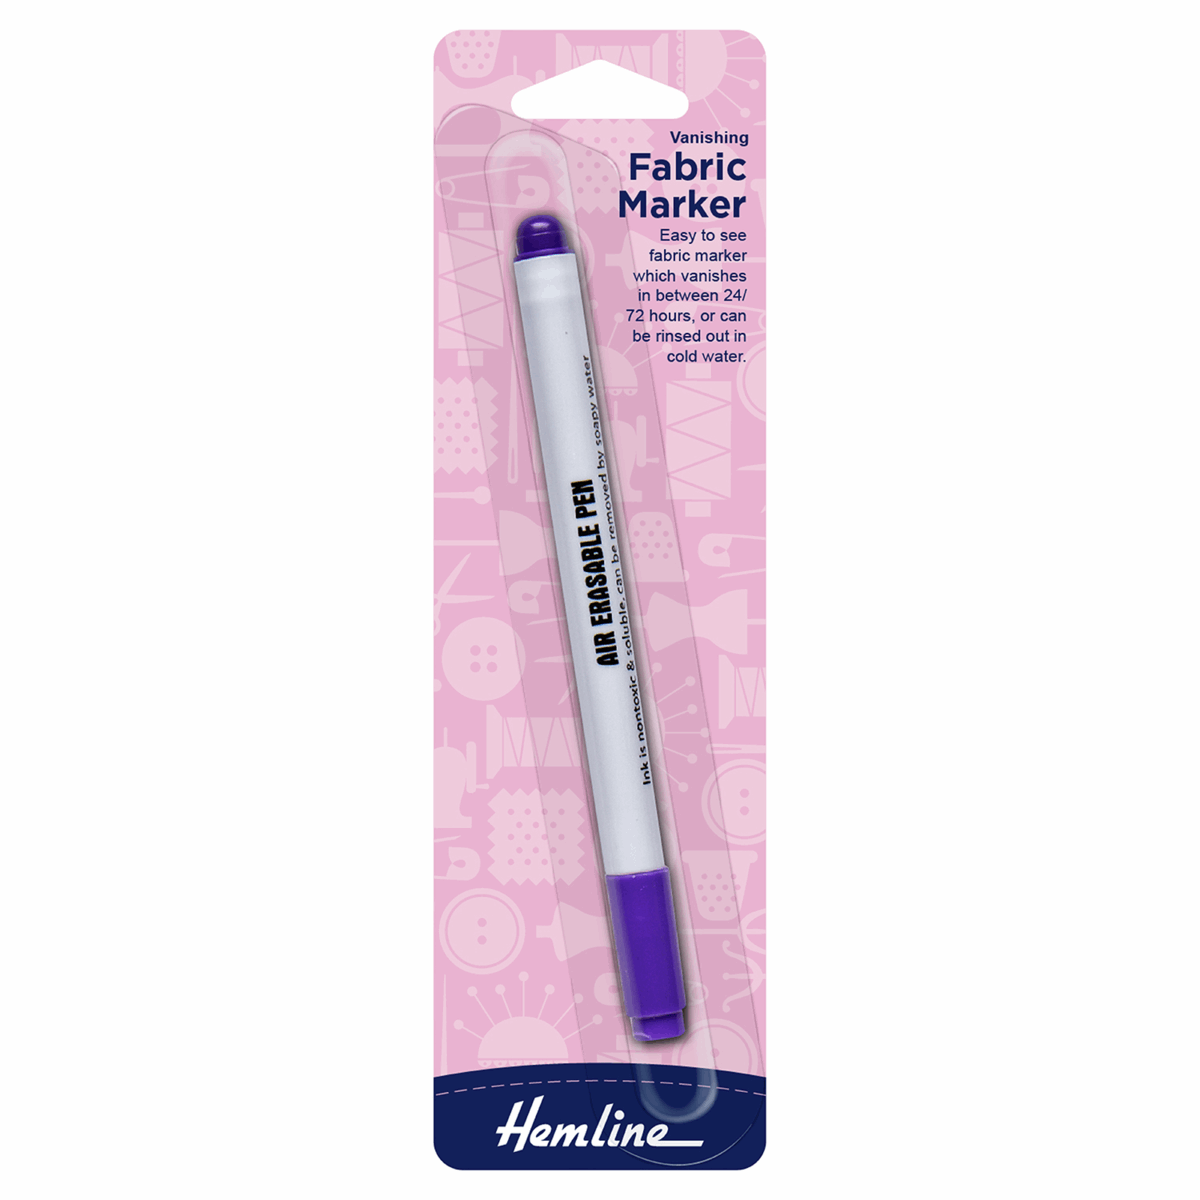 Hemline Vanishing Fabric Marker Pen